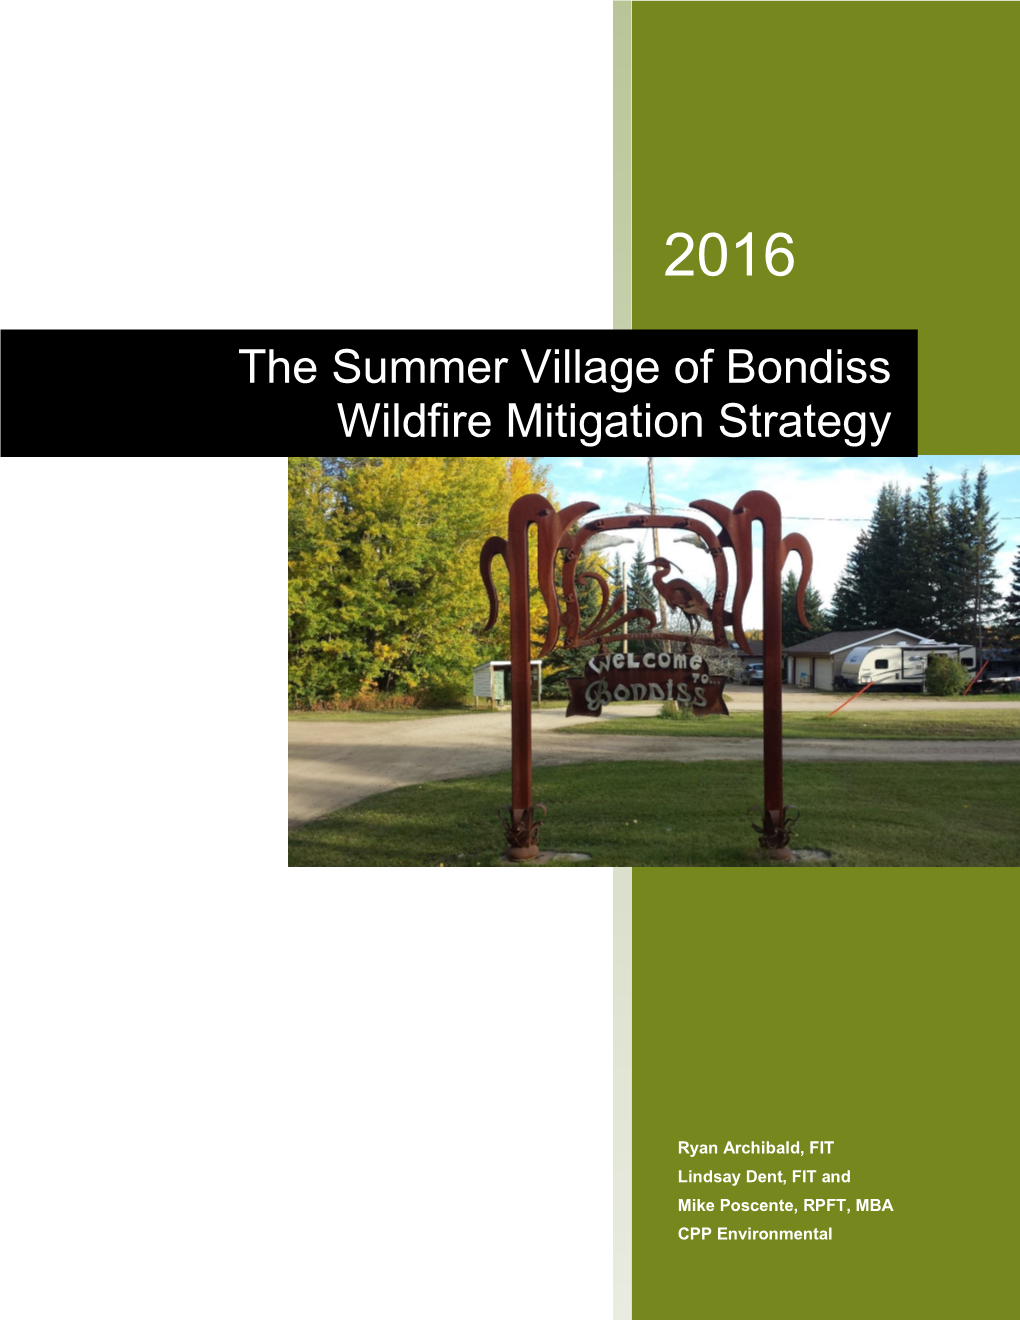 The Summer Village of Bondiss Wildfire Mitigation Strategy